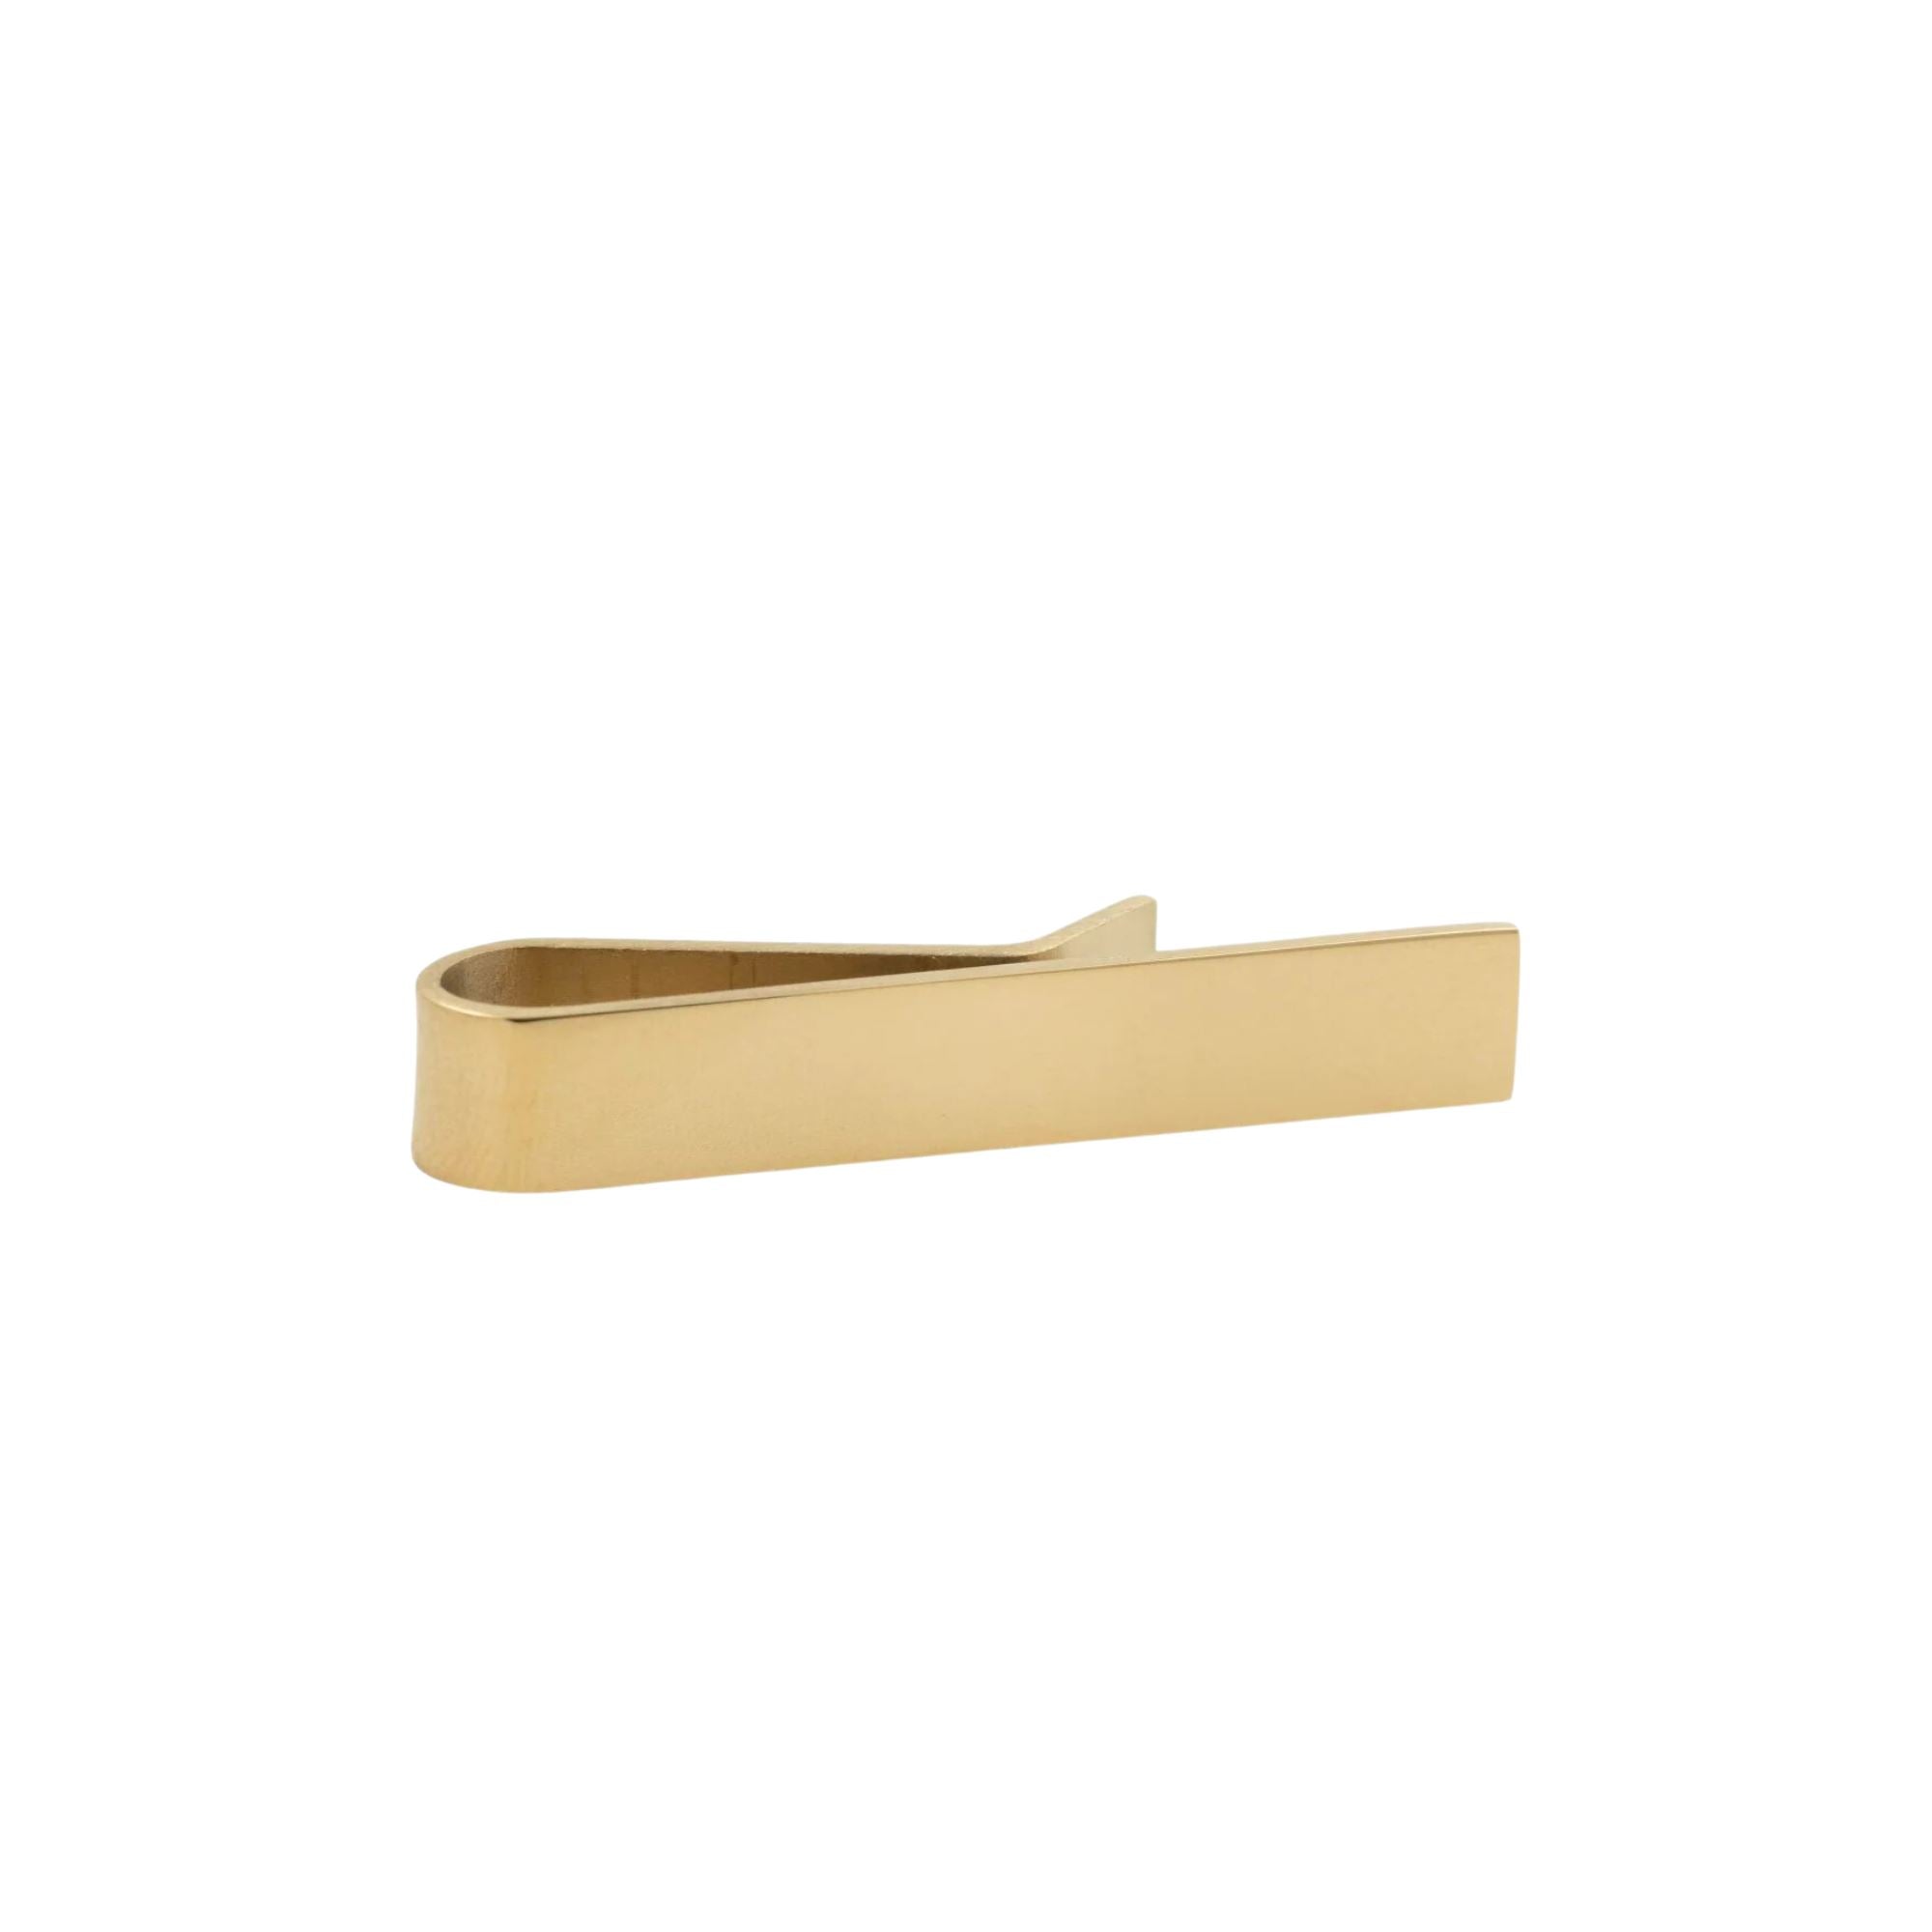 Small Shiny Gold Tie Bar 40mm Tie Bars Clinks 